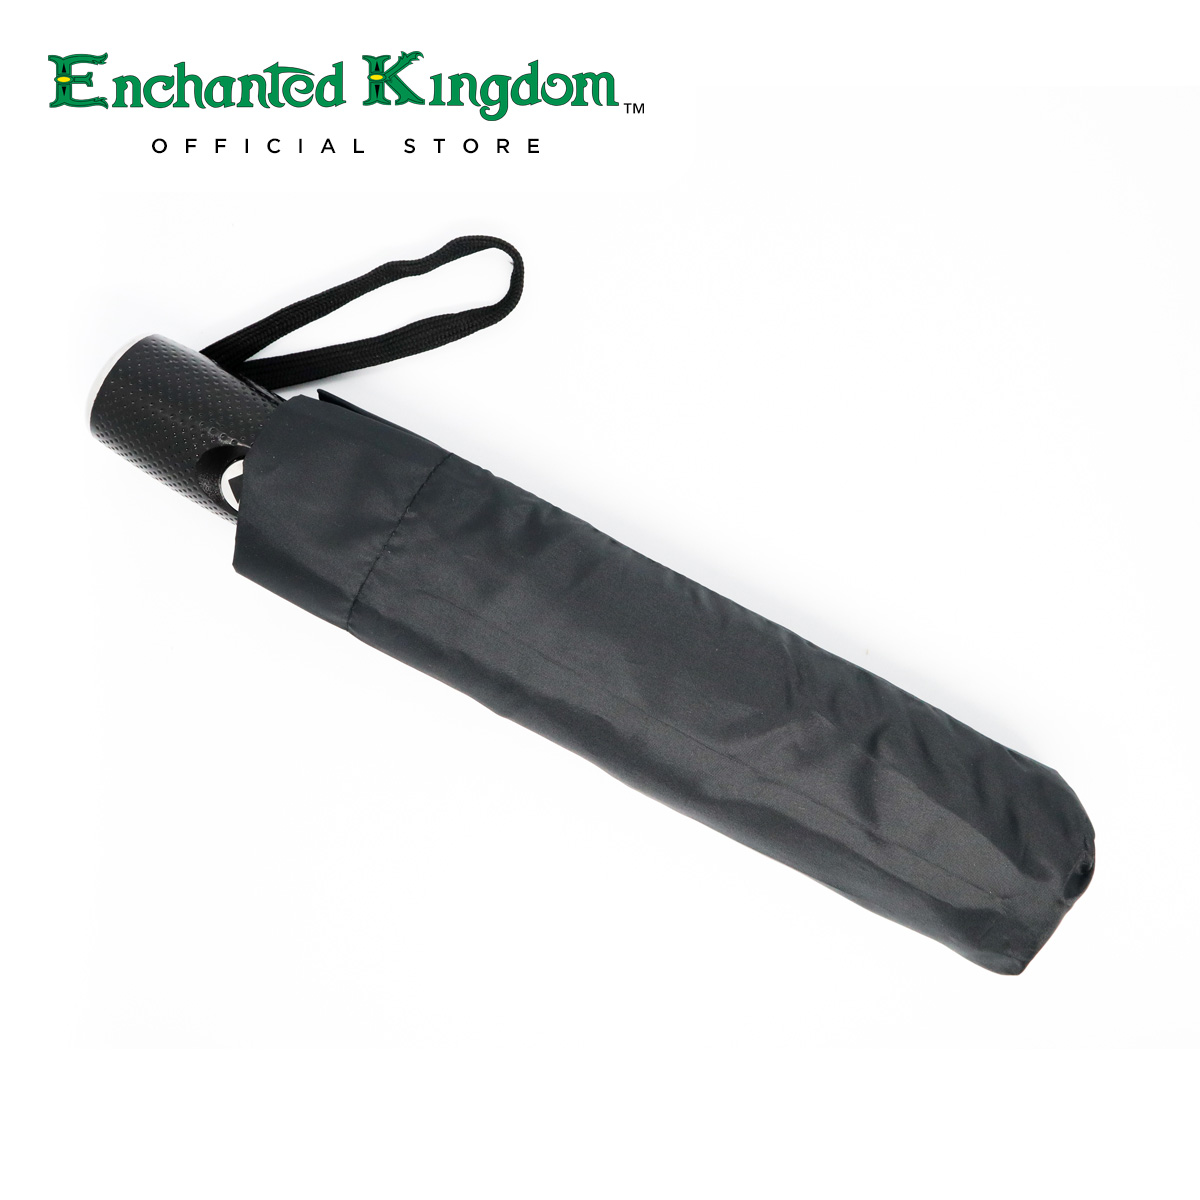 EK Foldable Umbrella